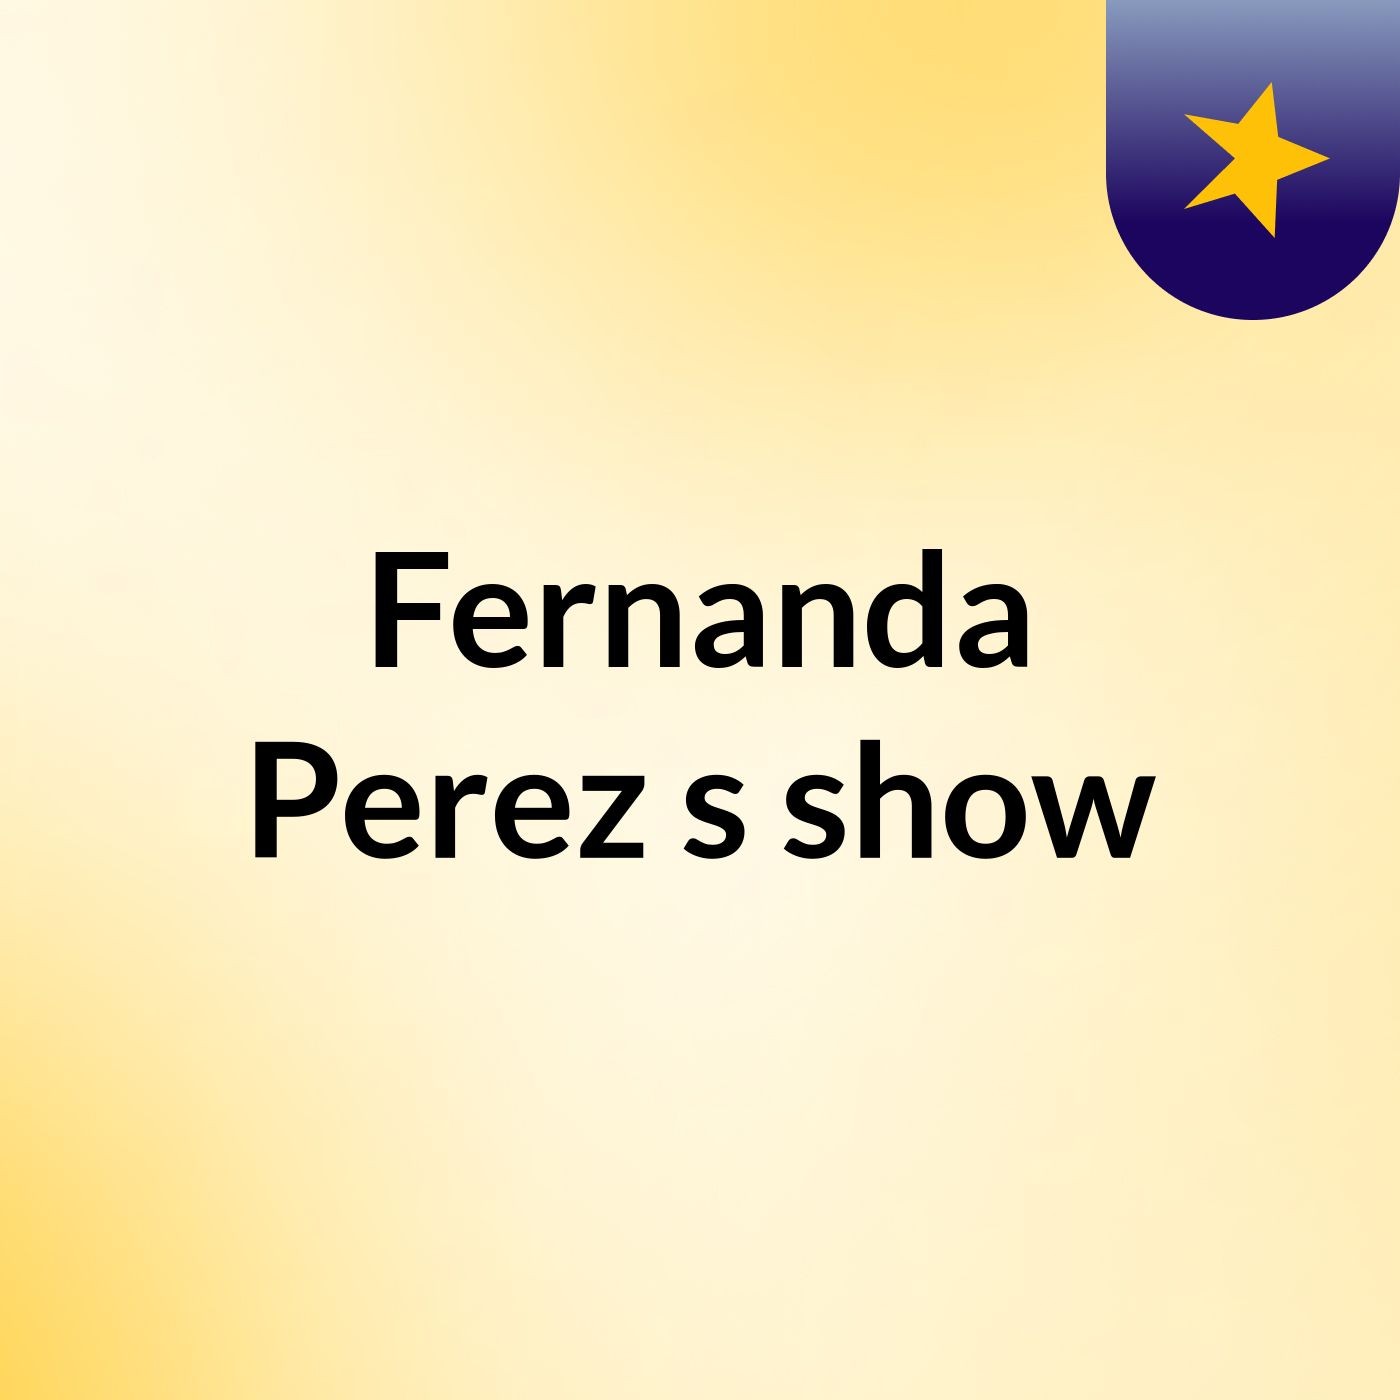 Fernanda Perez's show